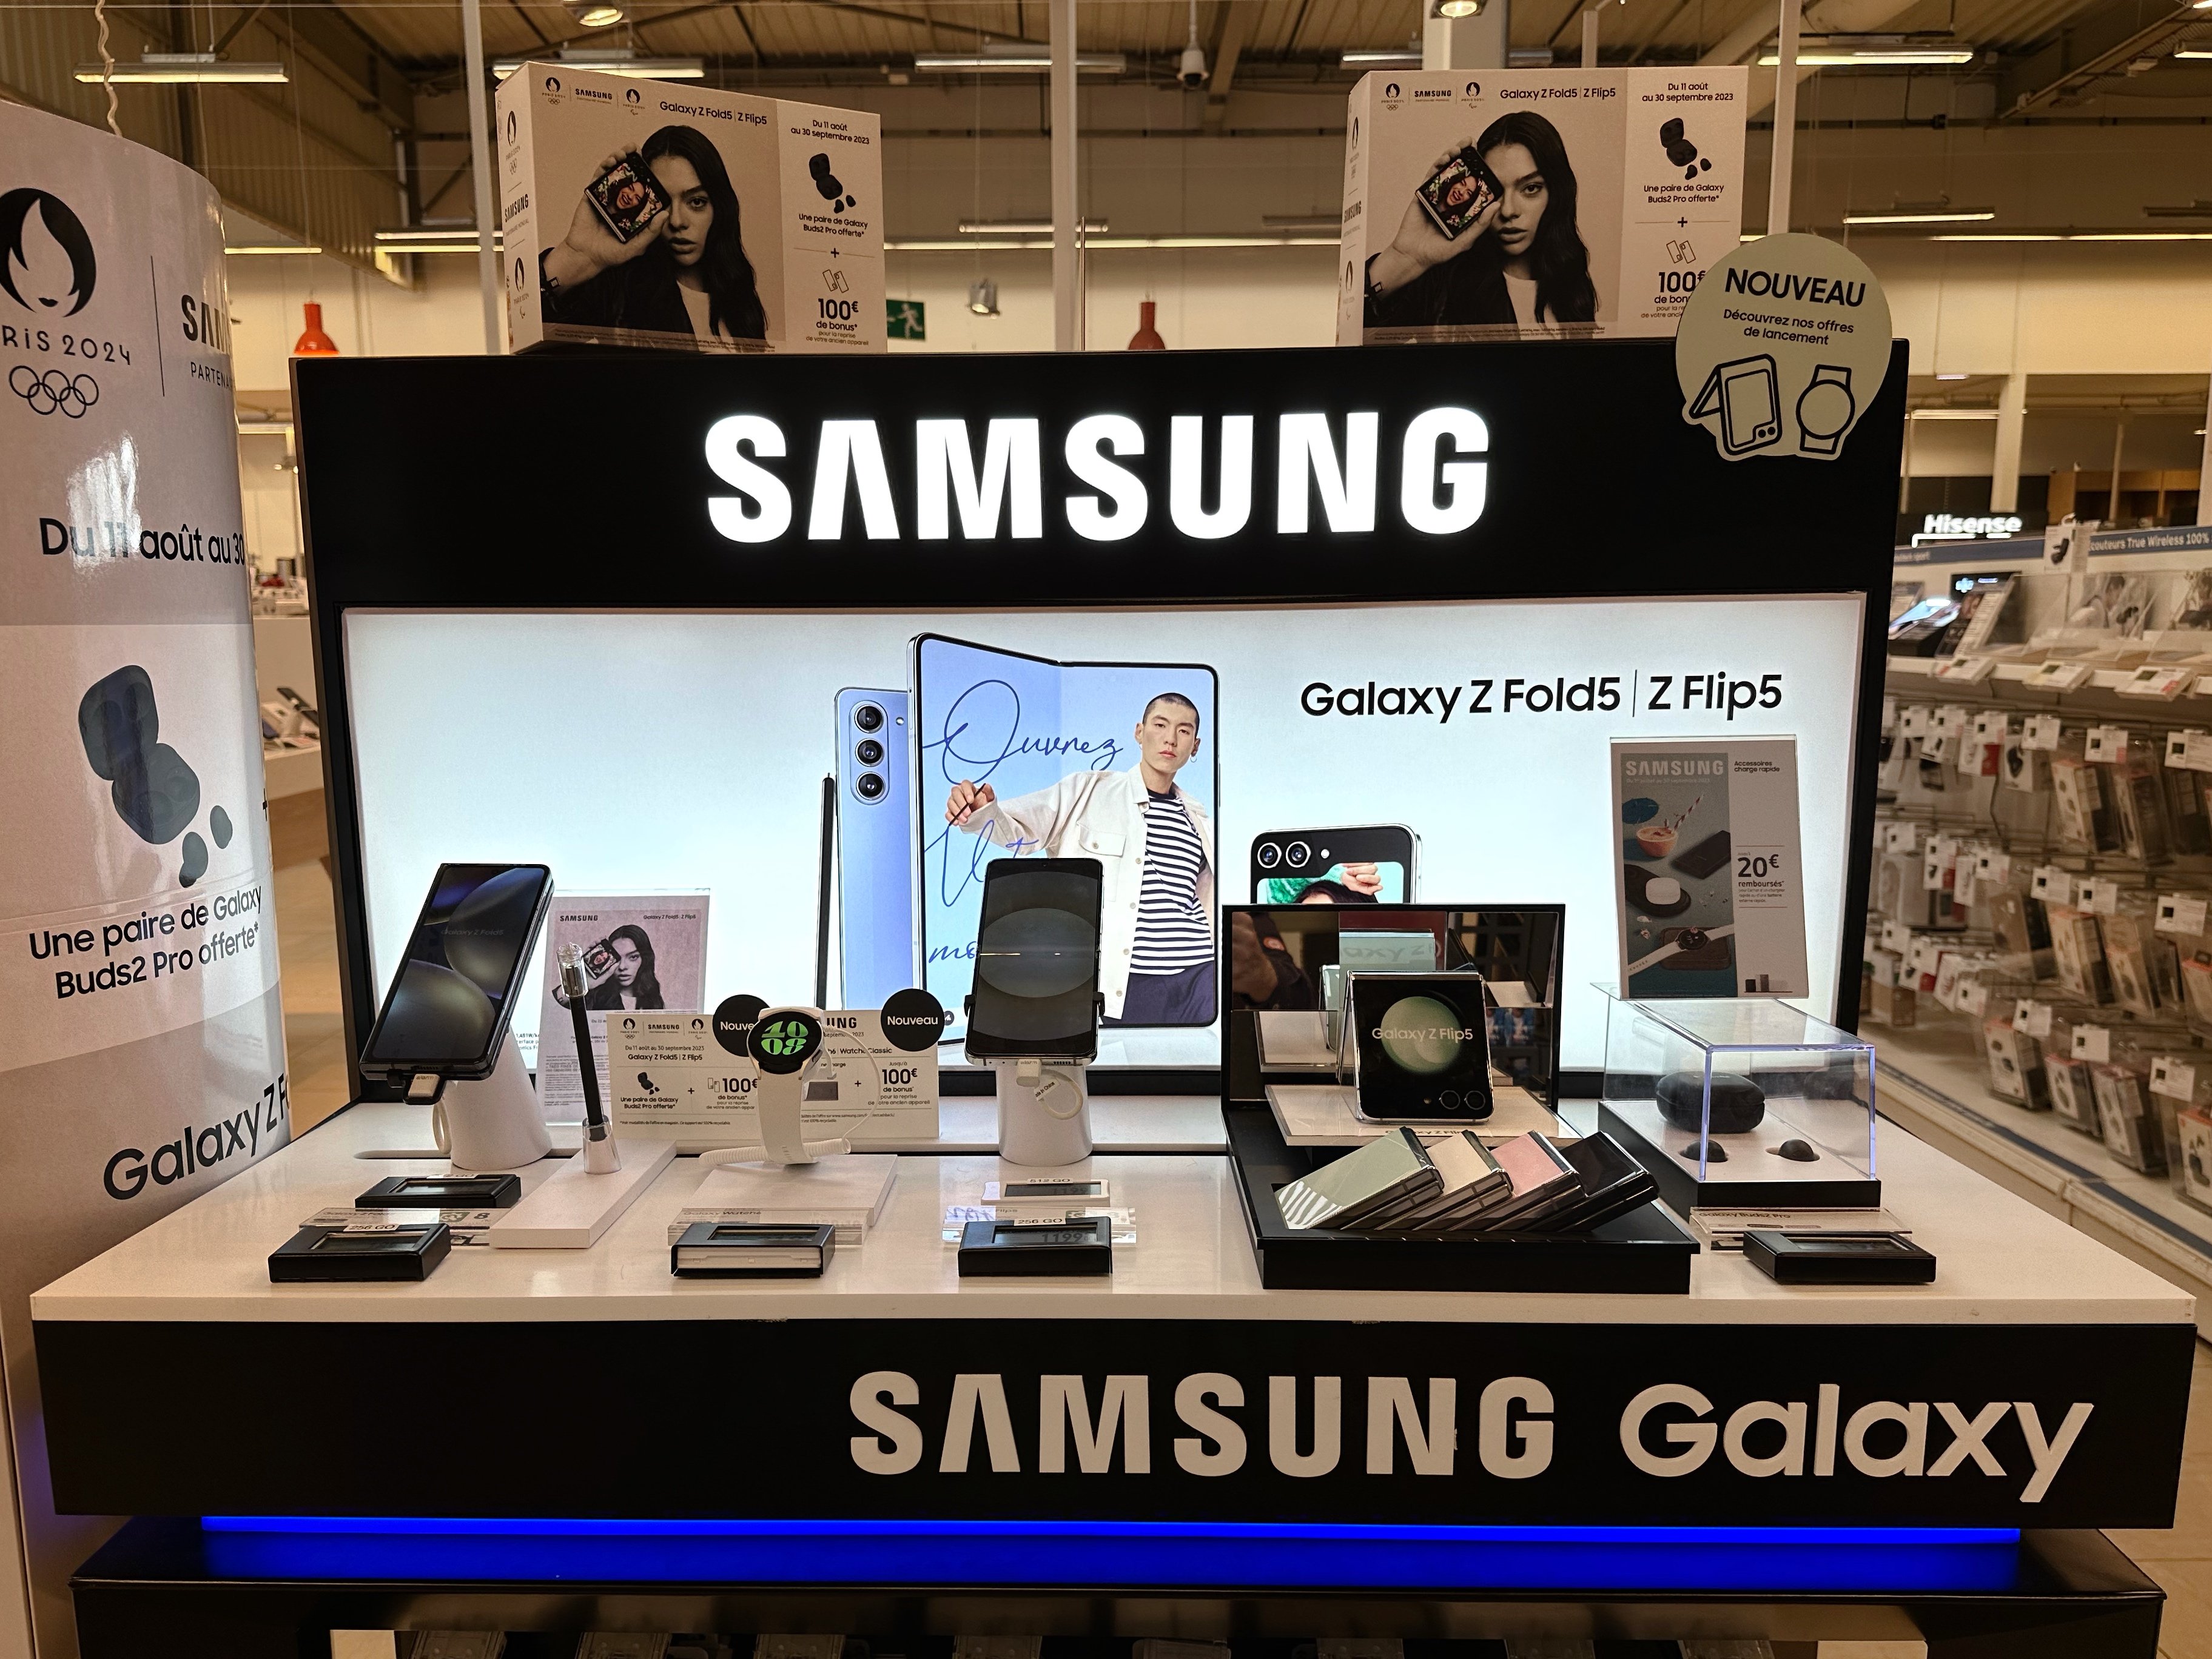 Espace smartphone pliable Samsung Galaxy Z Fold 5, Galaxy Z Flip 5 et Galaxy Buds Pro 2 - Boulanger Compiègne